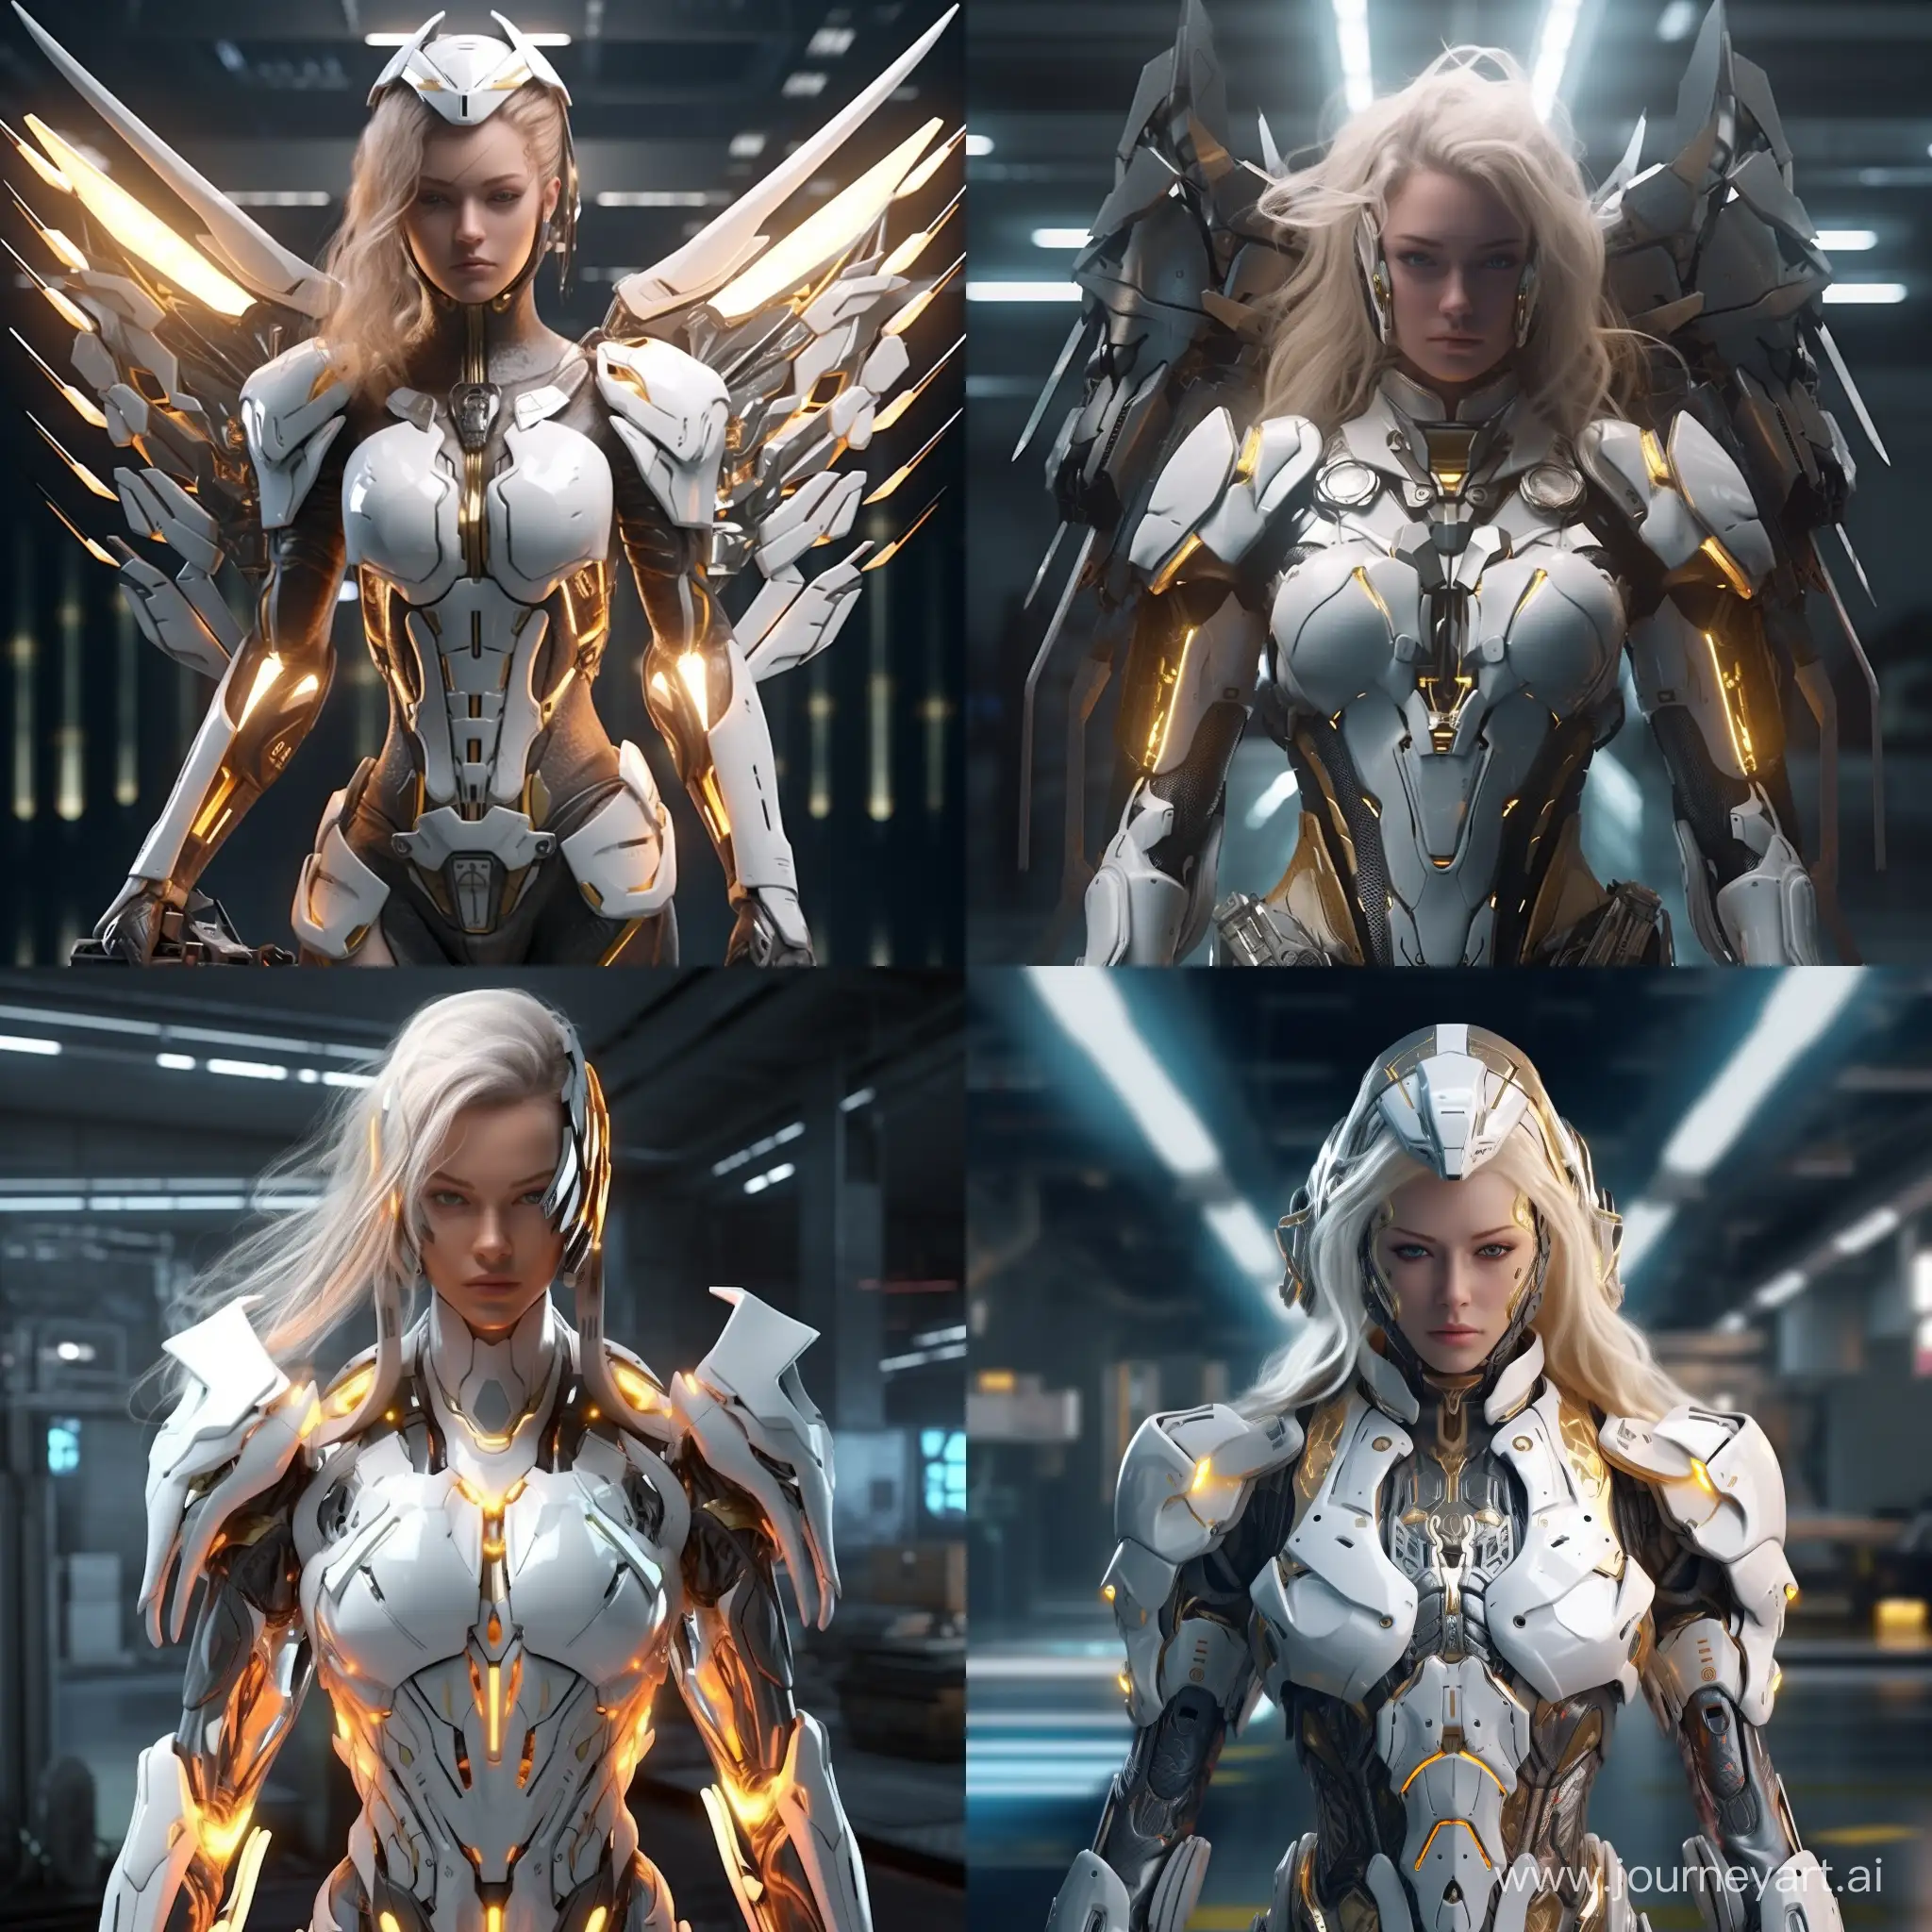 Futuristic-Angel-in-Cyberpunk-Armor-with-Crossbow